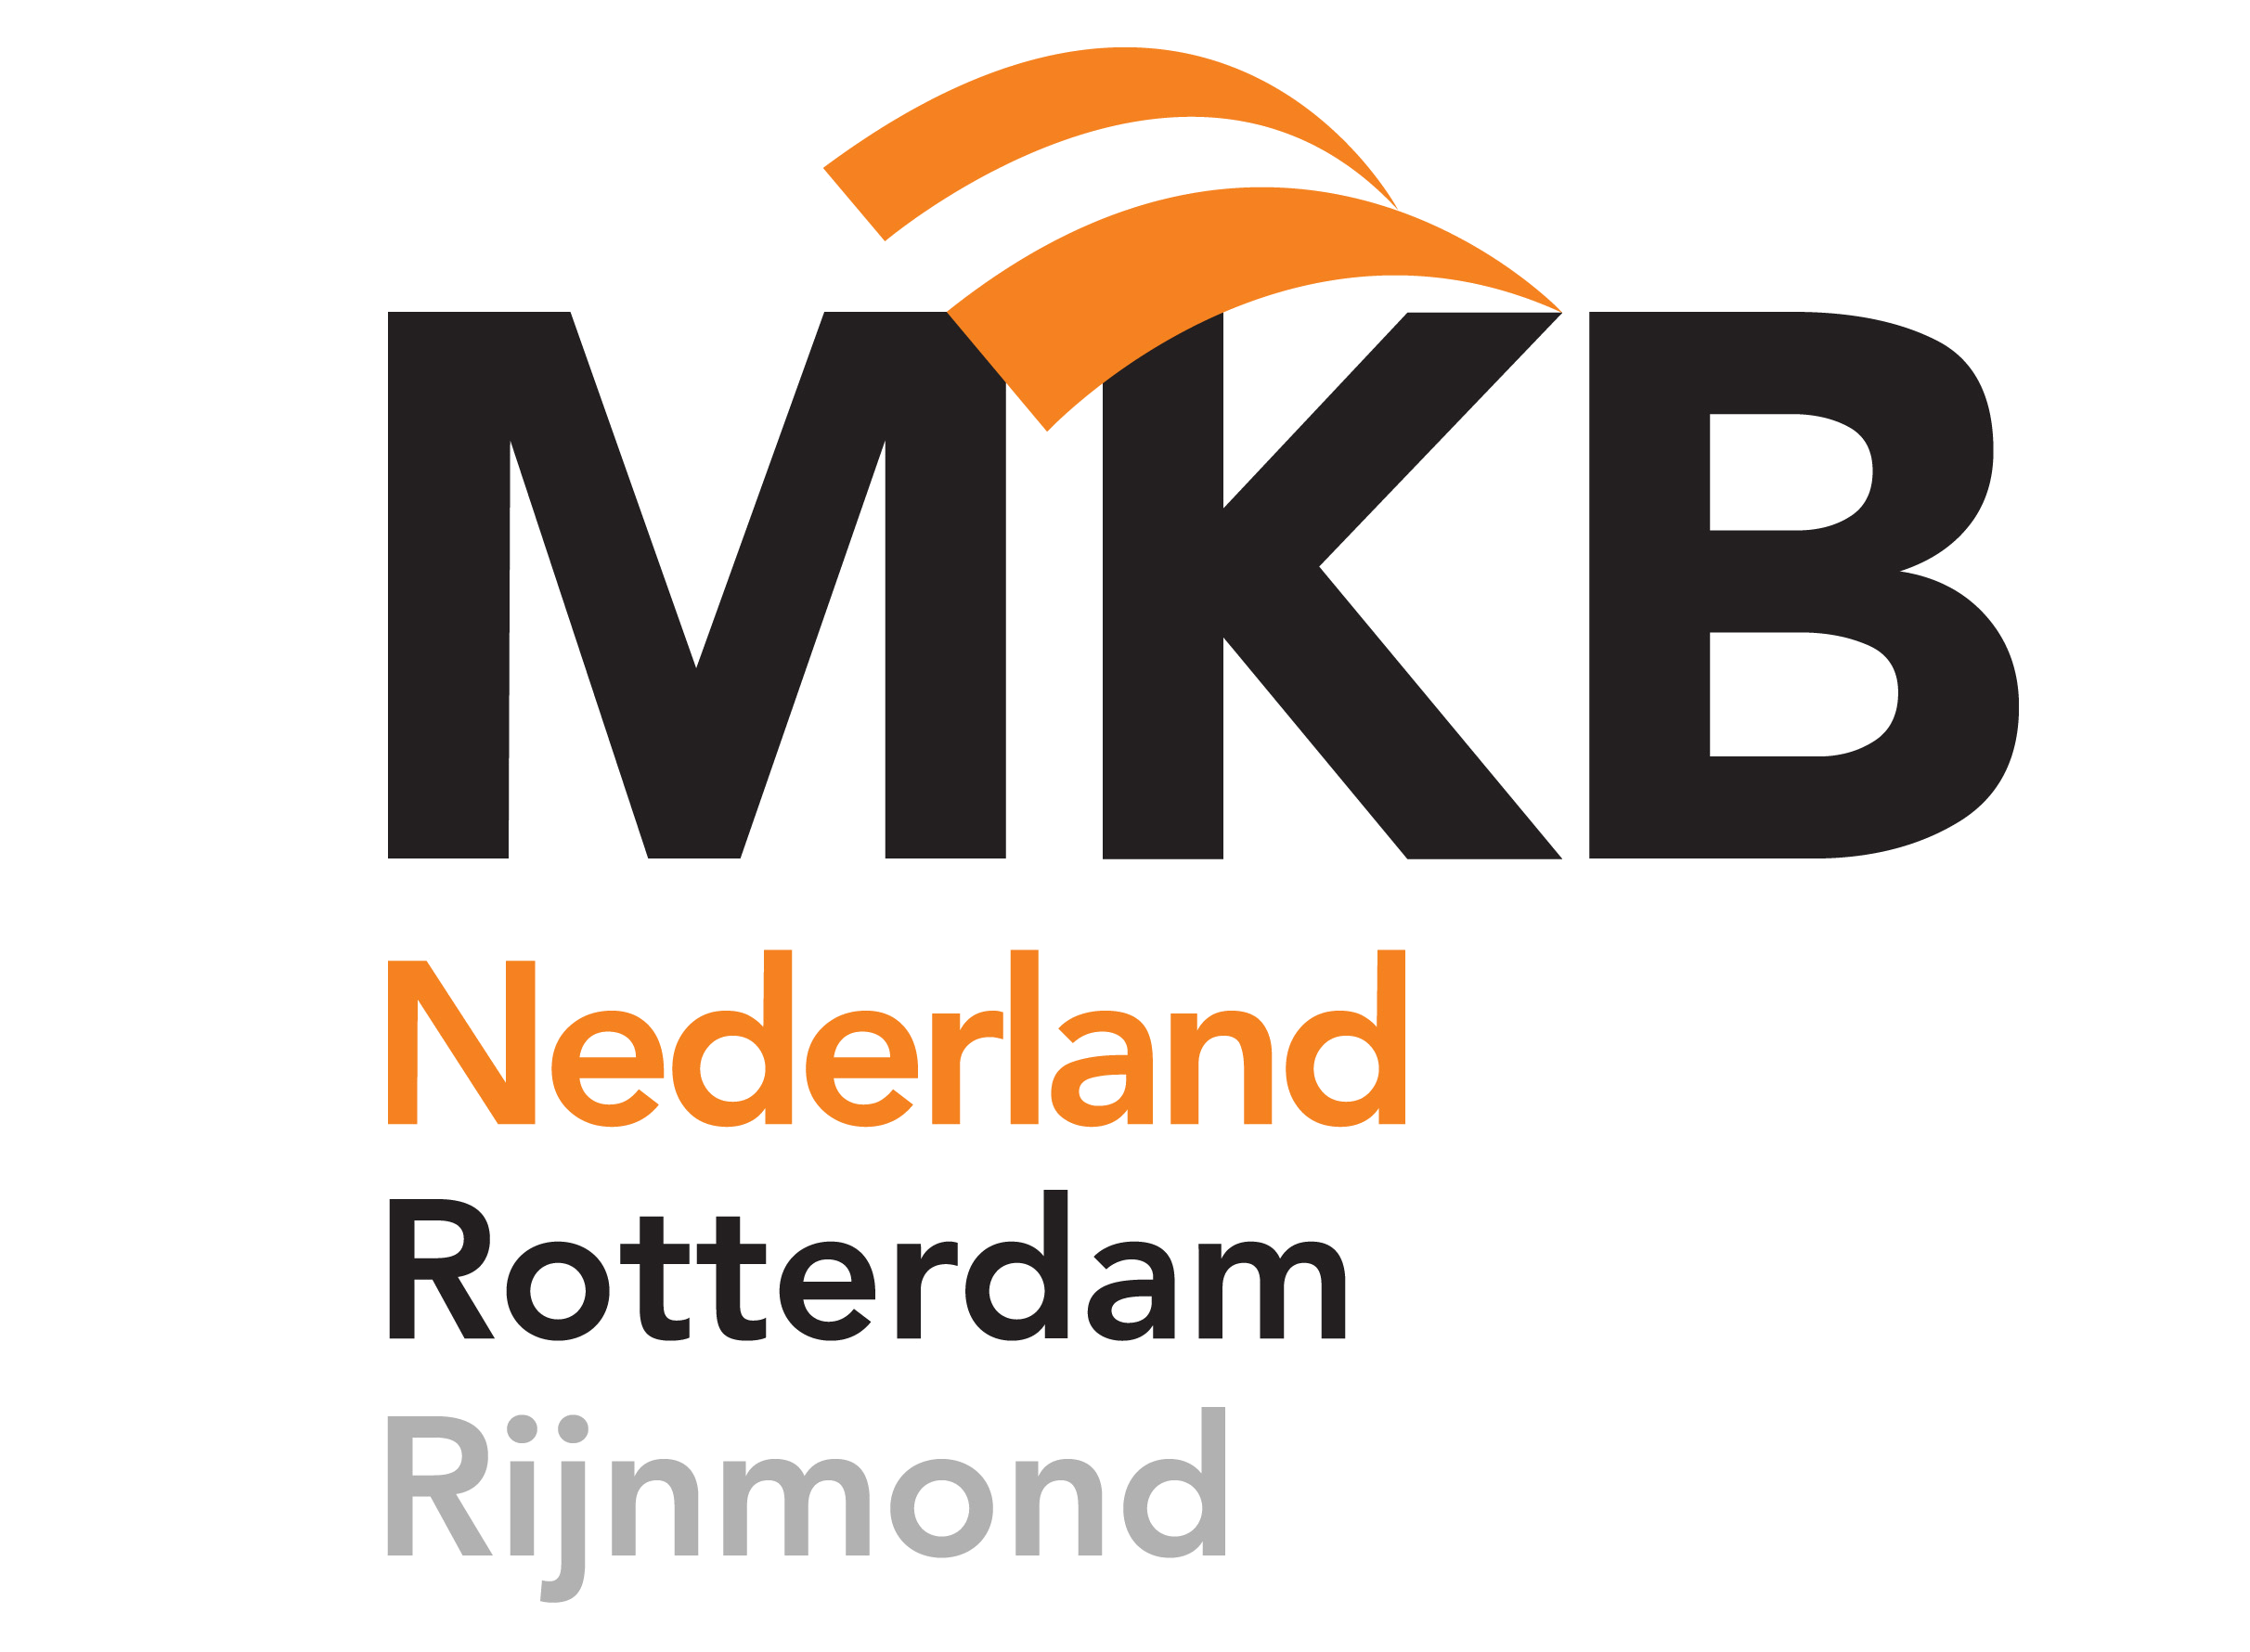 MKB Nederland Rotterdam Rijnmond